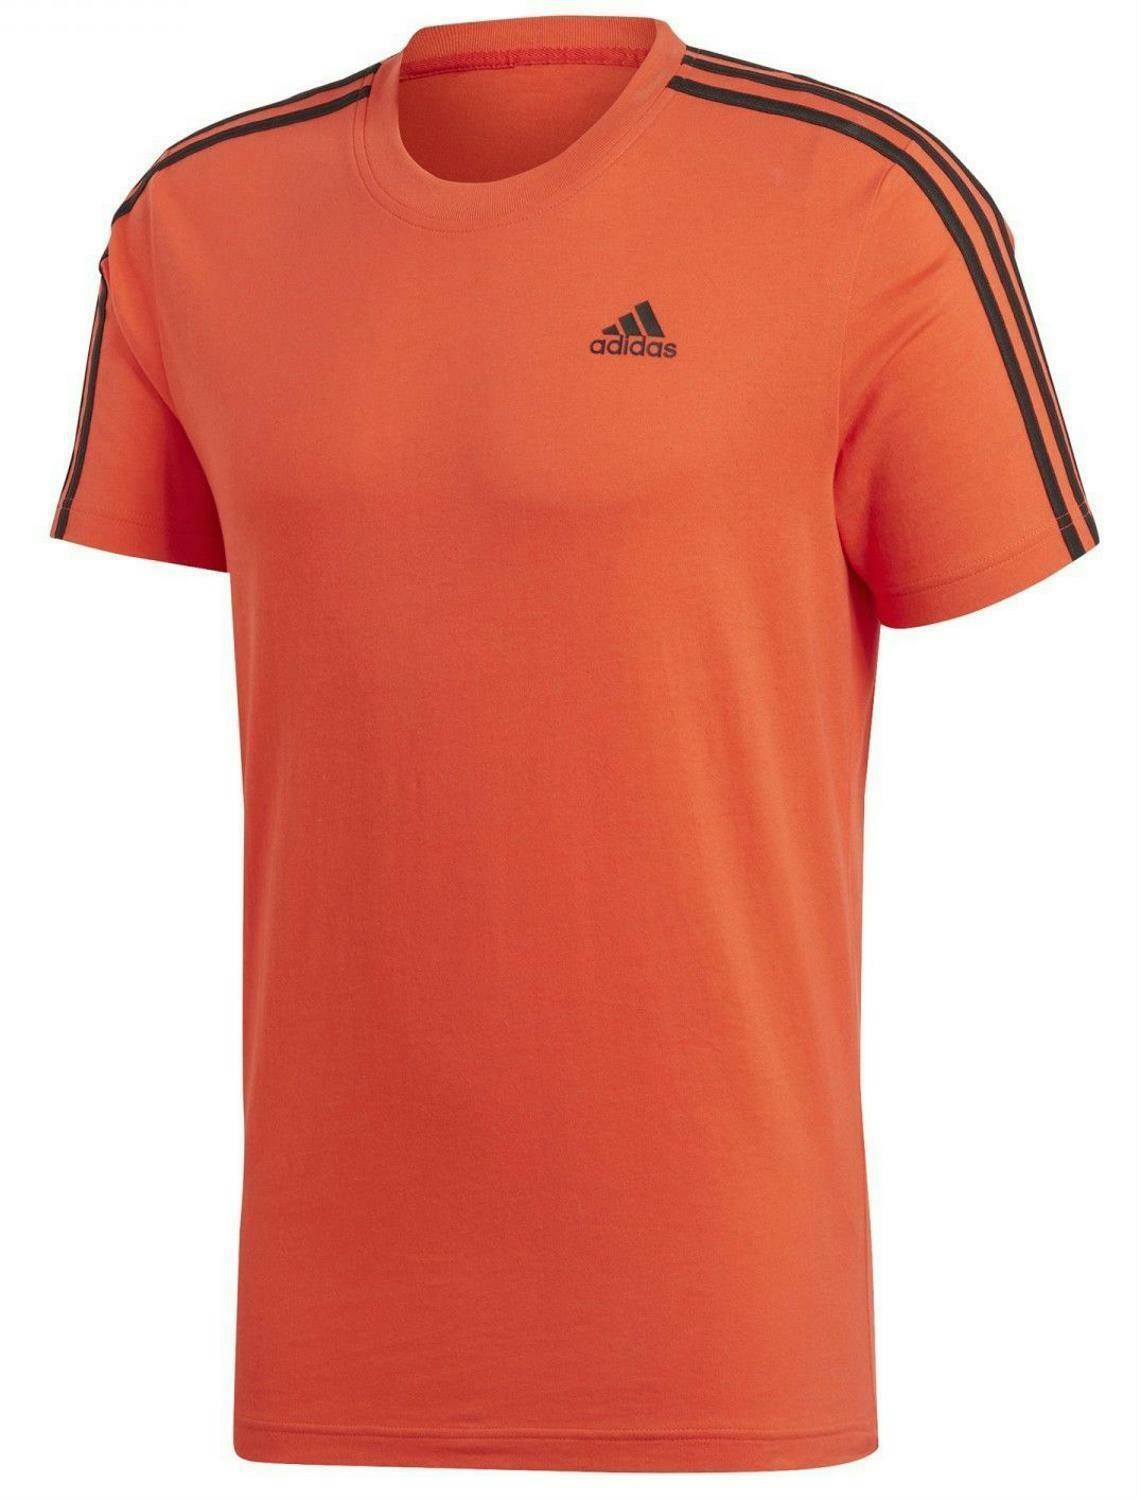 adidas adidas ess 3s tee t-shirt uomo arancio cw3806